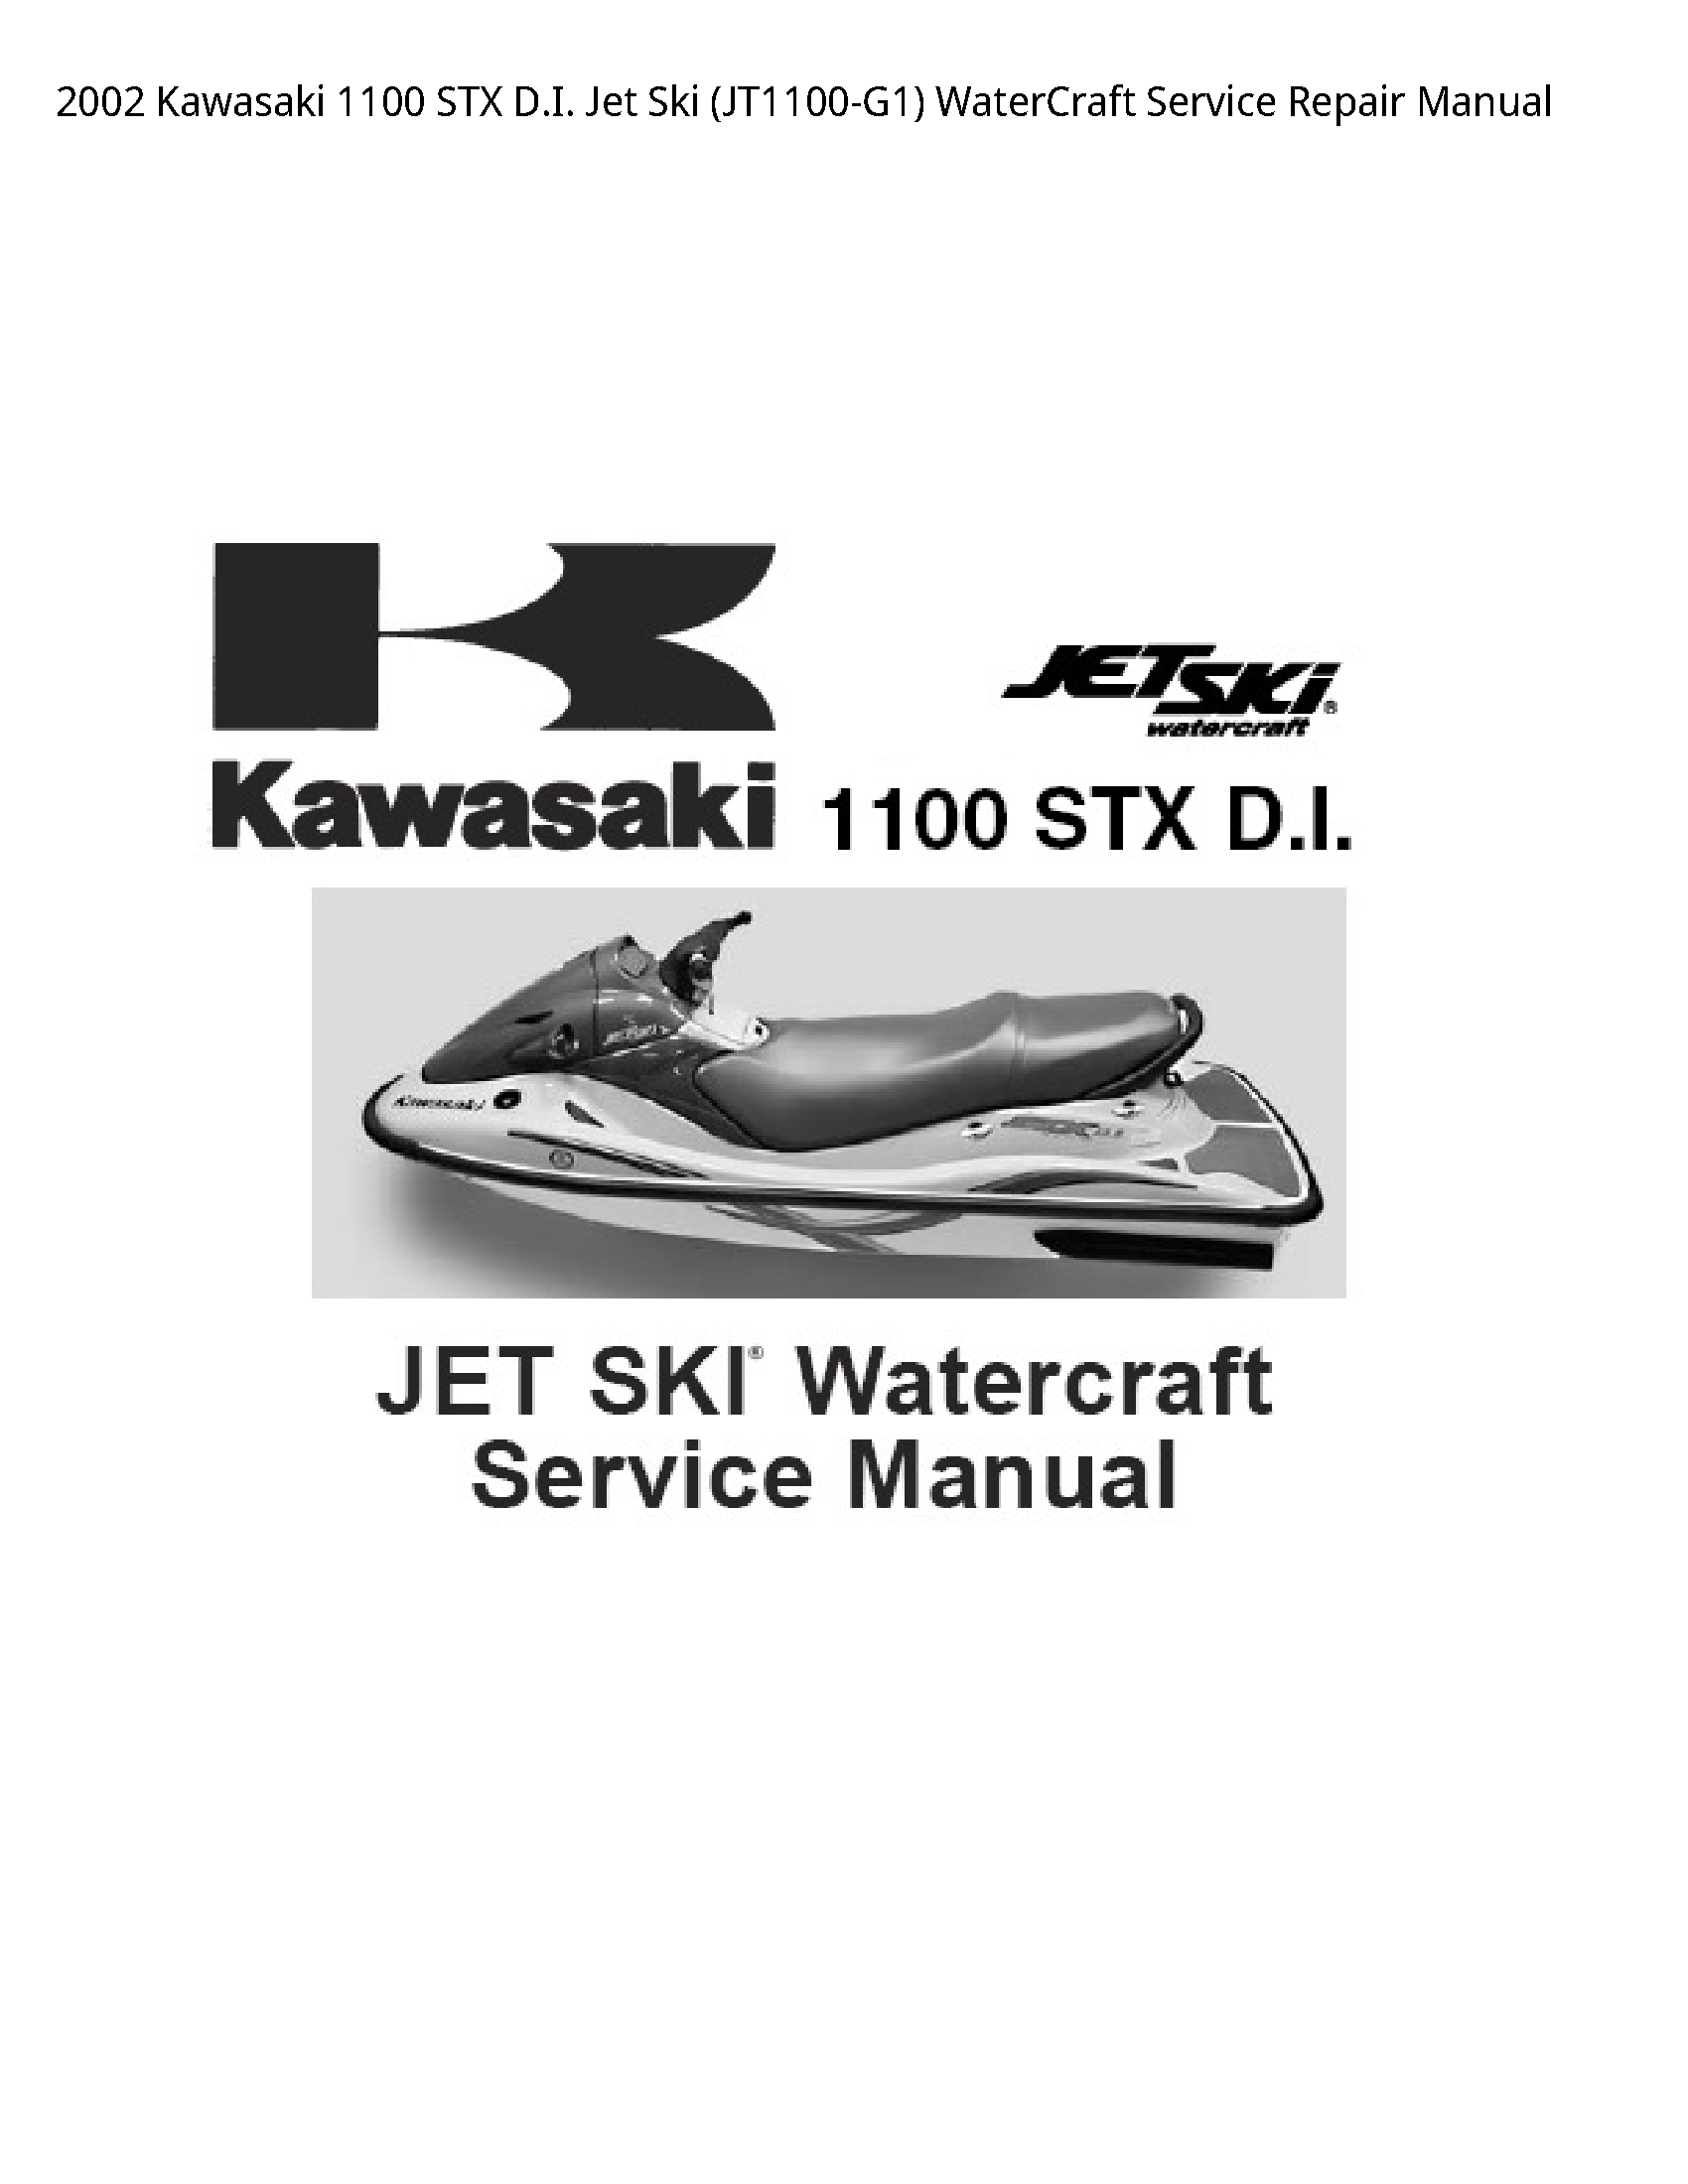 Kawasaki 1100 STX D.I. Jet Ski WaterCraft manual